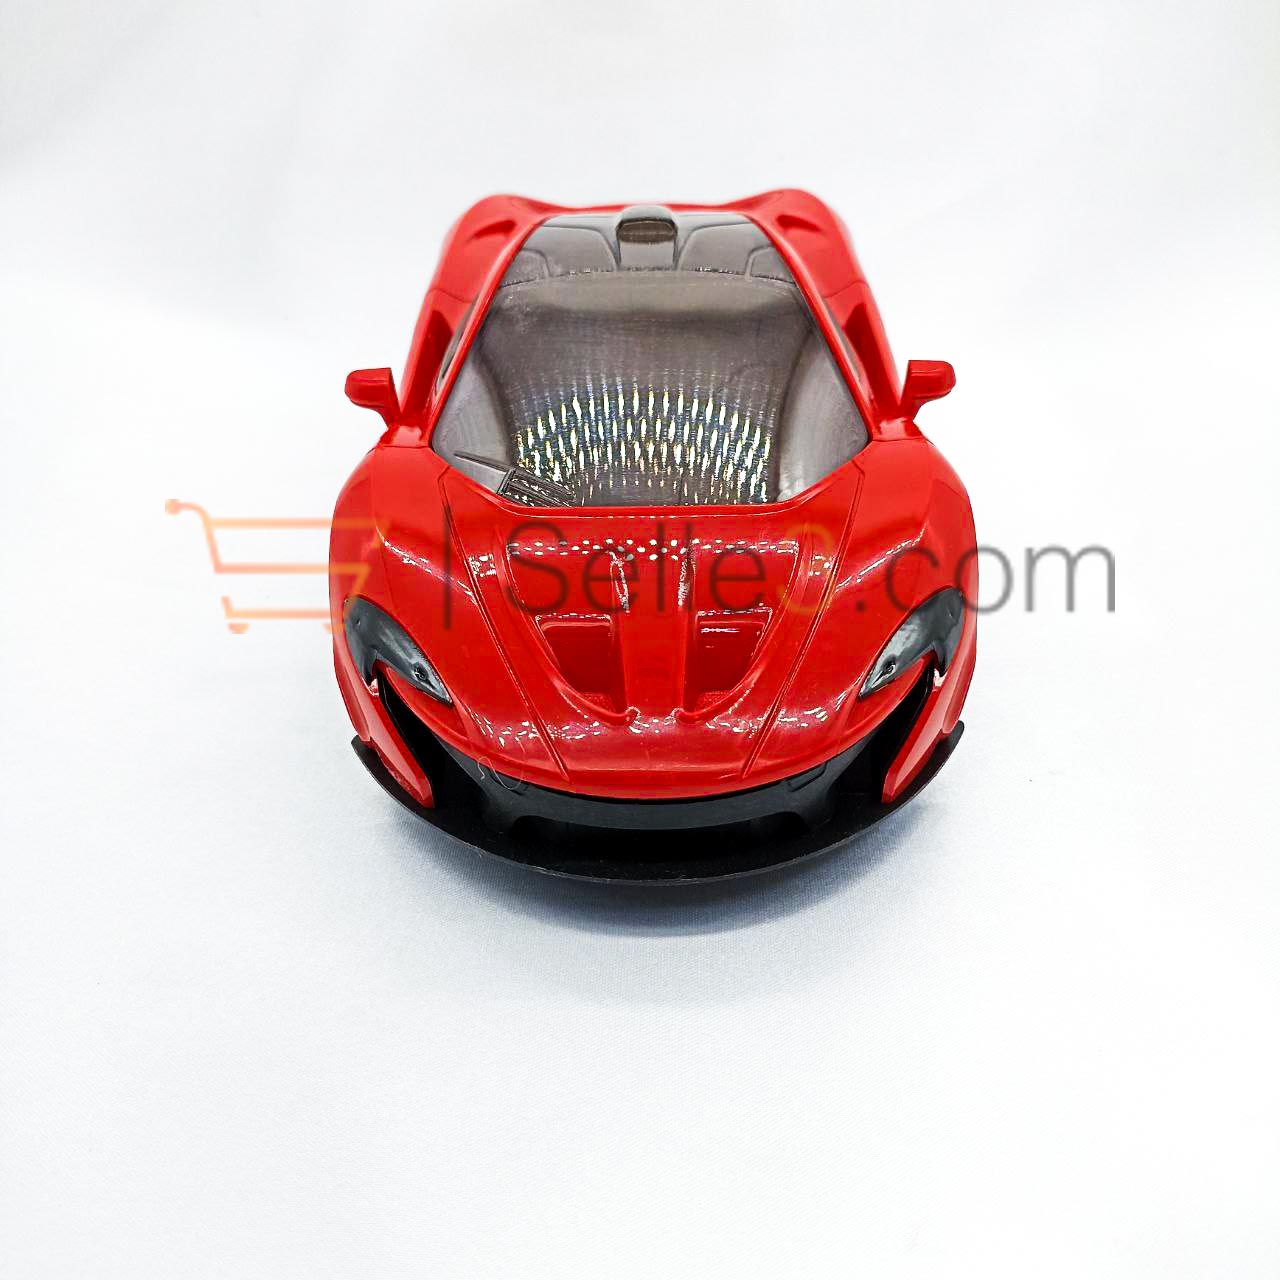 سيارة مكلارن Mclaren Miniature Model Car Toy